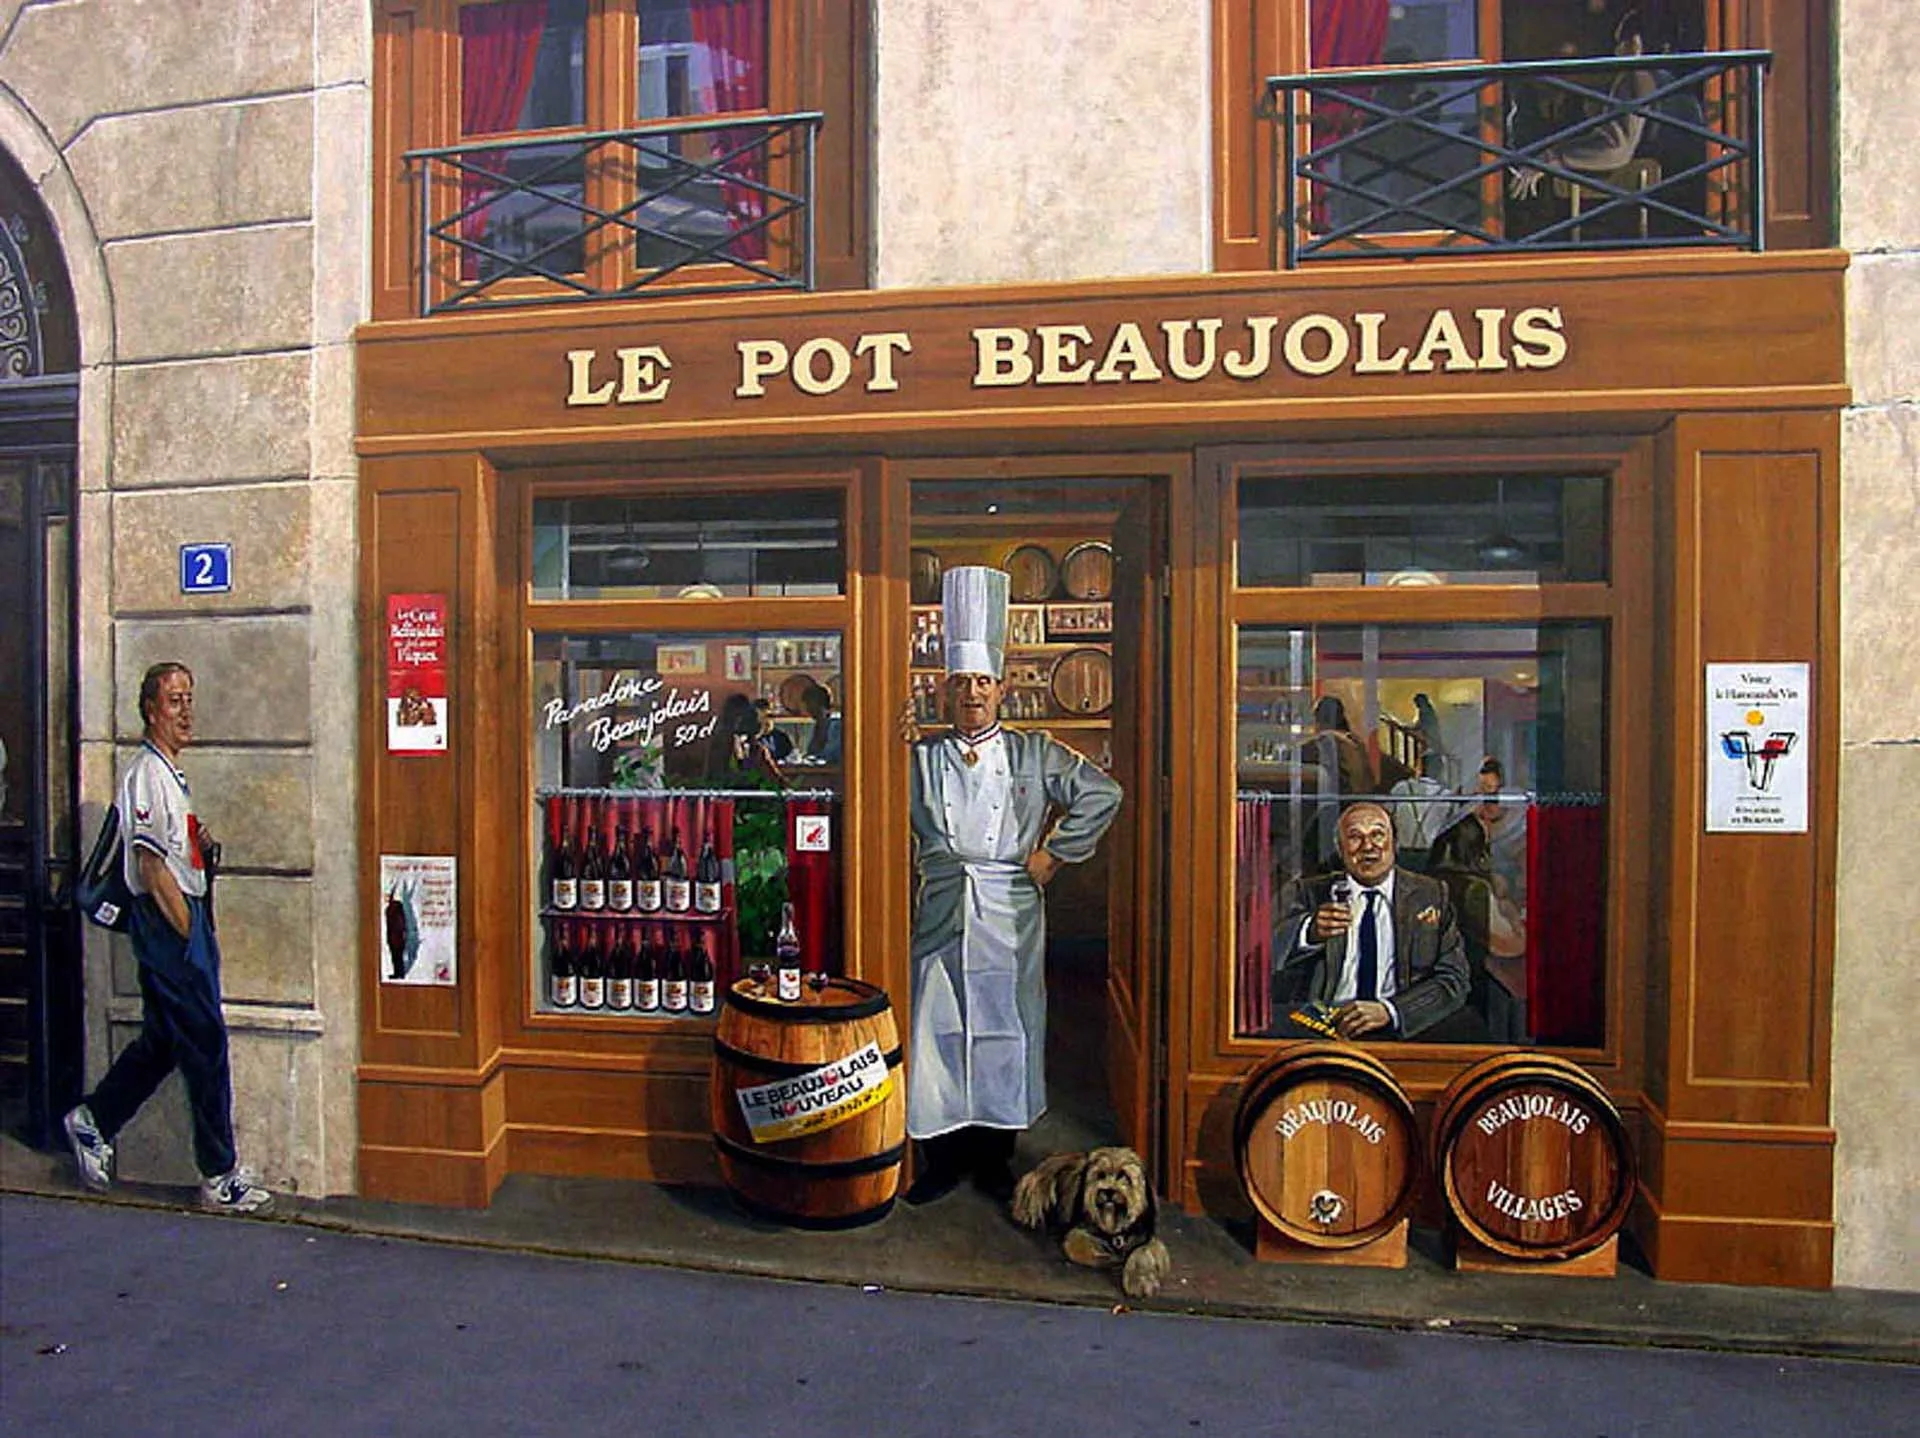 Le Pot beaujolais Lyon